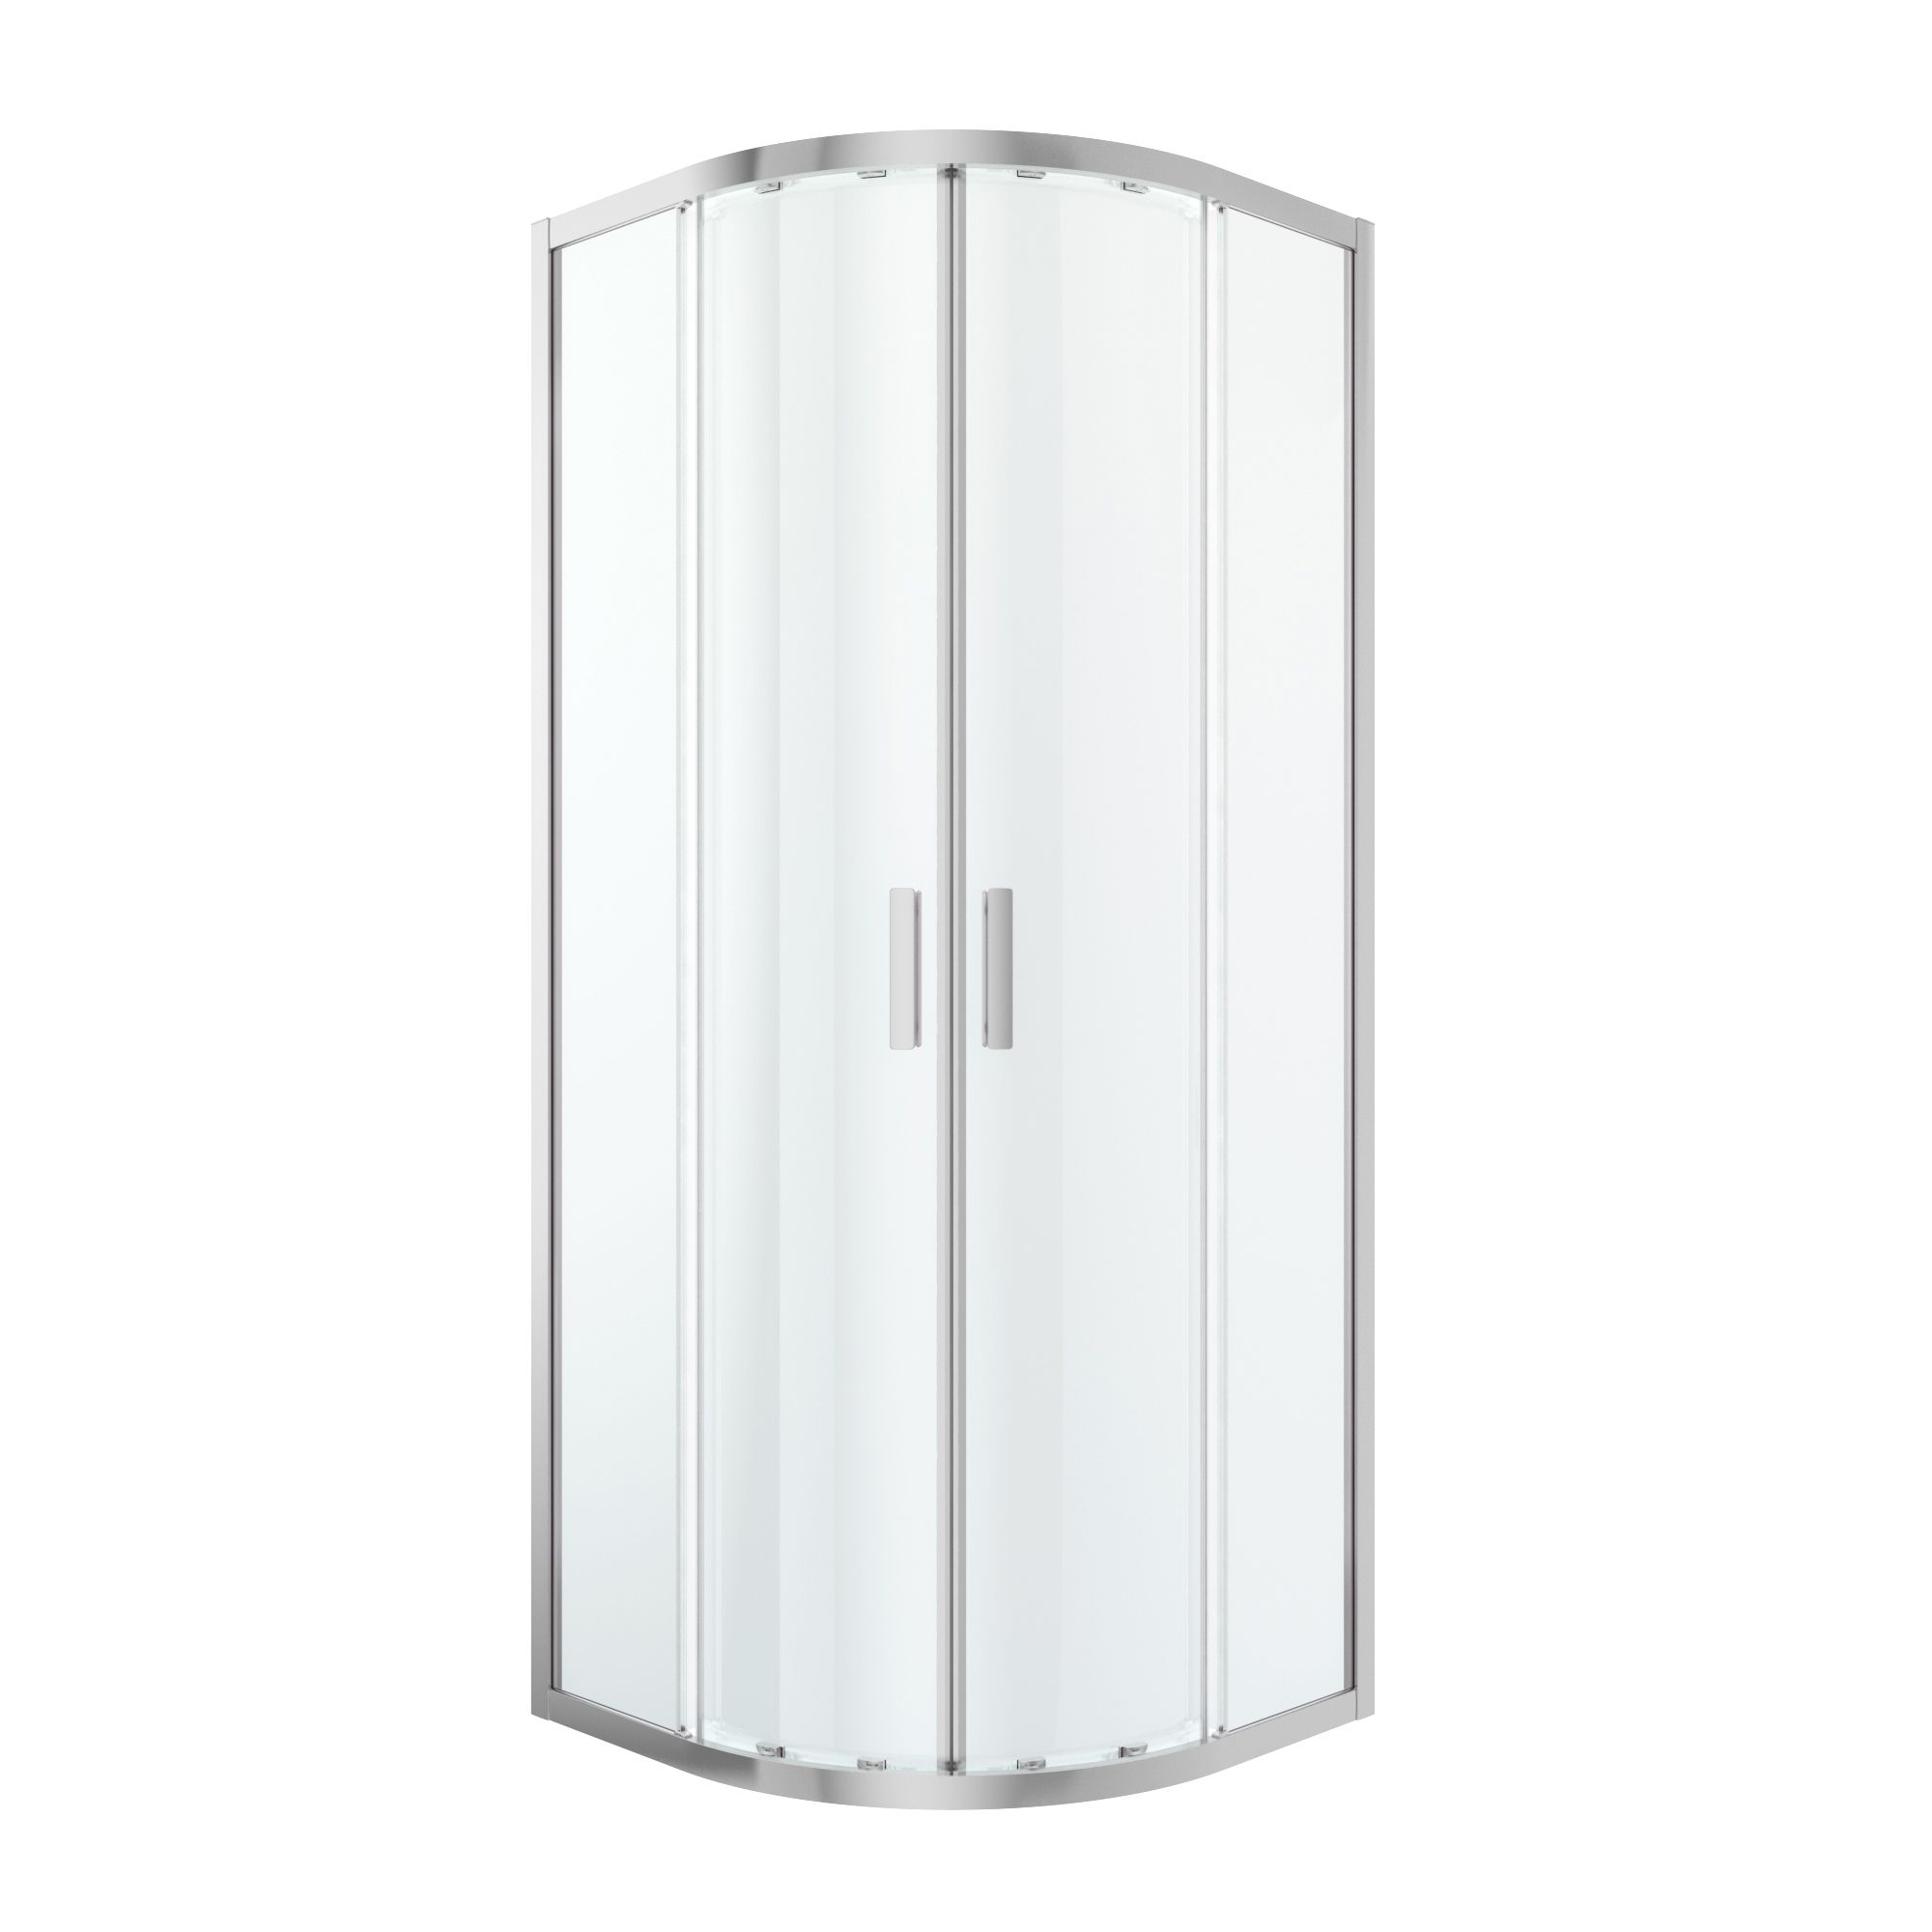 GoodHome Beloya Silver effect Universal Quadrant Shower Enclosure & tray - Corner entry double sliding door (H)195cm (W)80cm (D)80cm